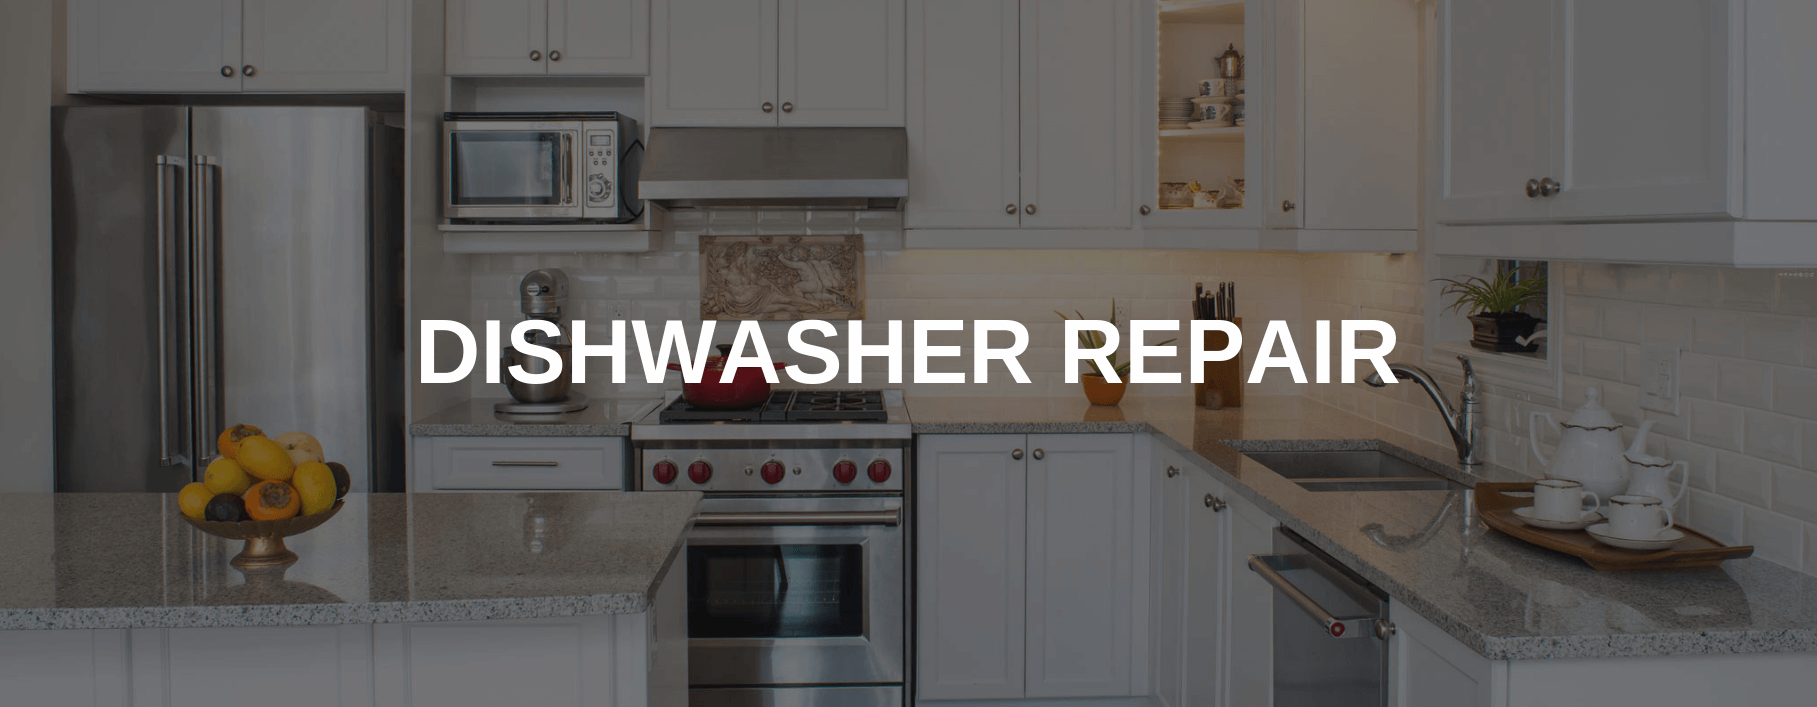 dishwasher repair aurora